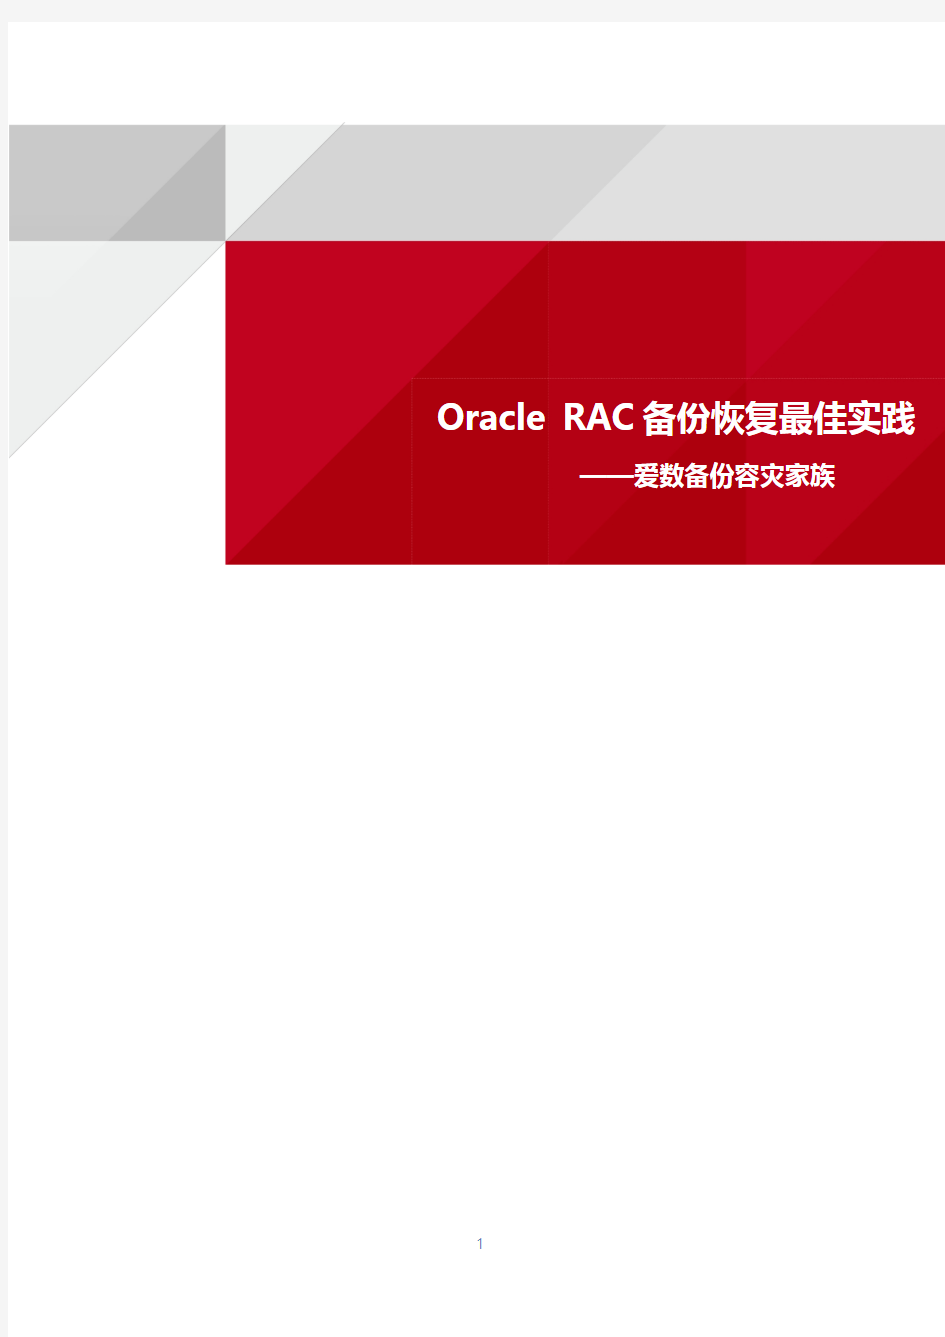 AnyBackup Oracle RAC备份与恢复最佳实践